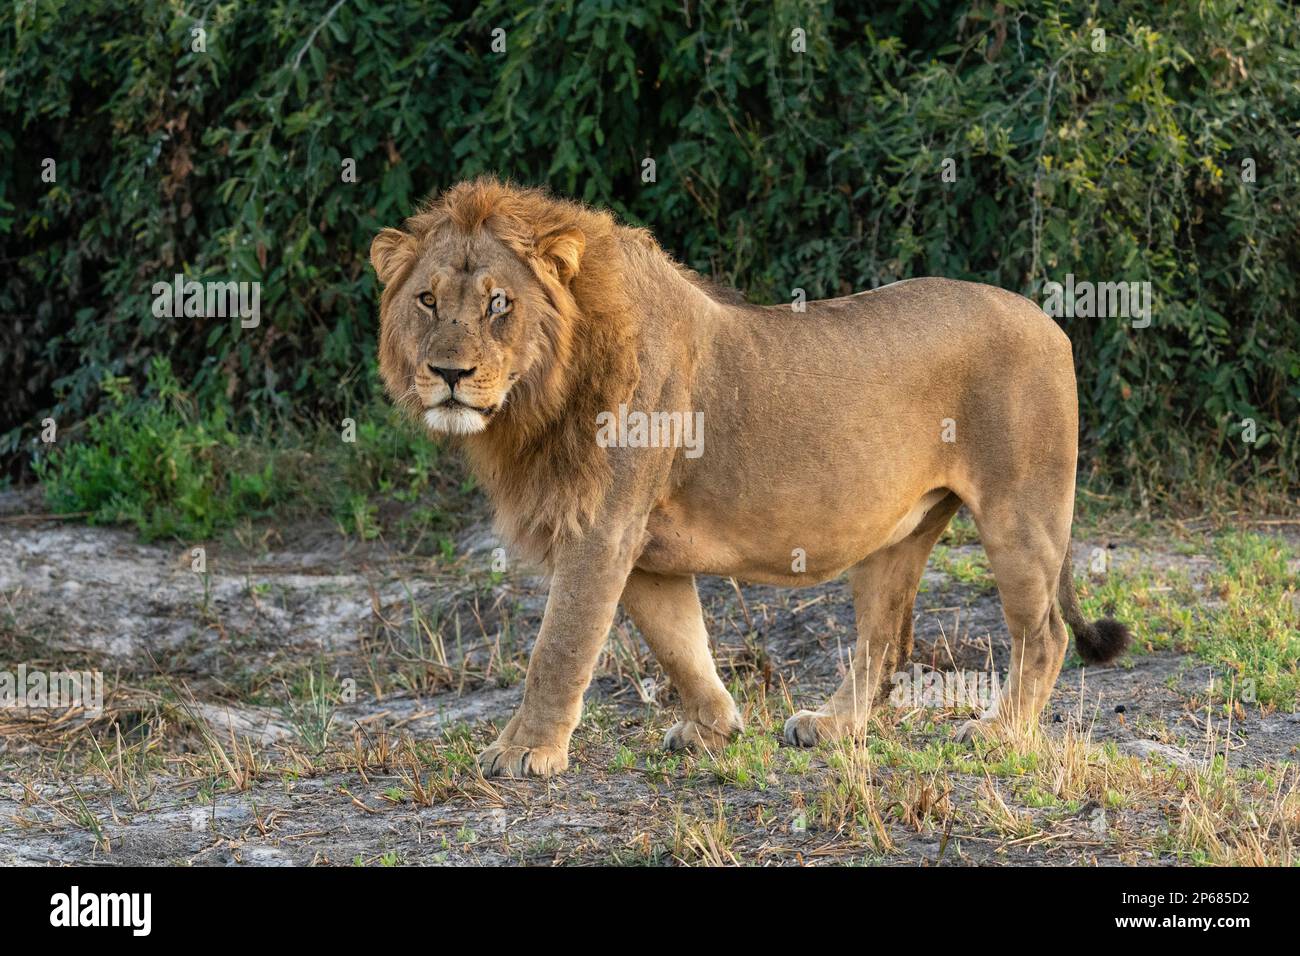 Lion (Panthera leo), Savuti, Chobe National Park, Botswana, Africa Banque D'Images